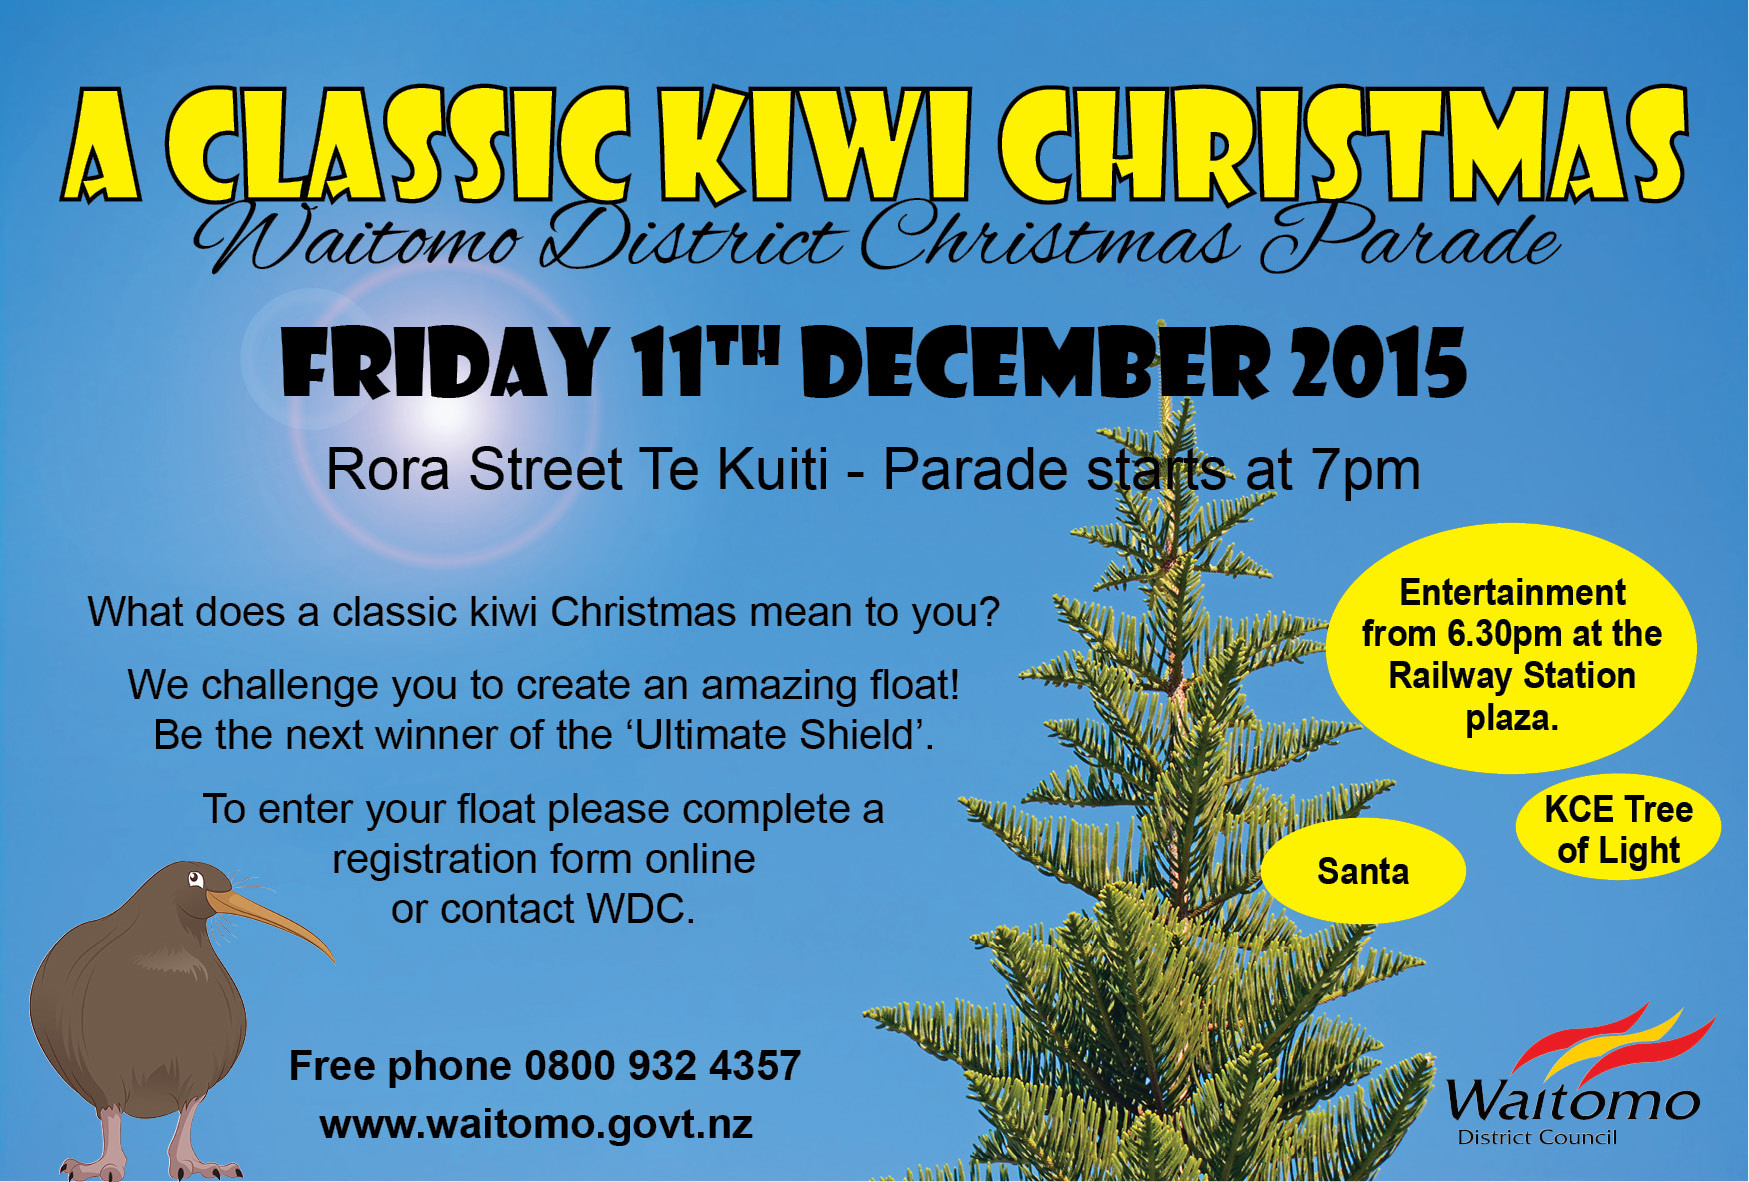 A Classic Kiwi Christmas